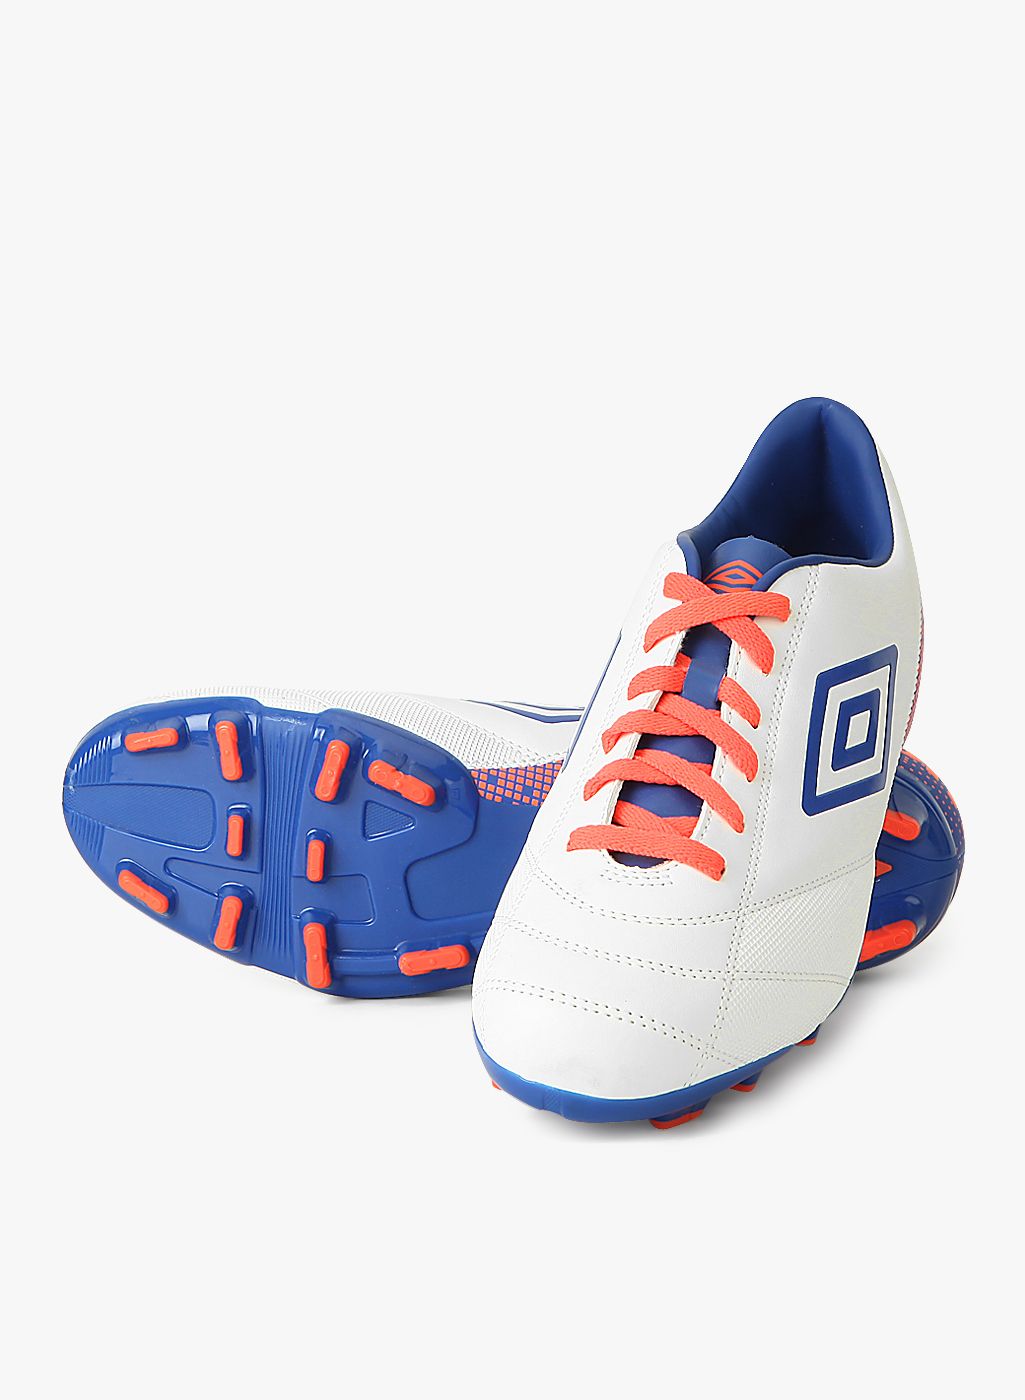 Umbro Extremis 3 White Football Shoes 